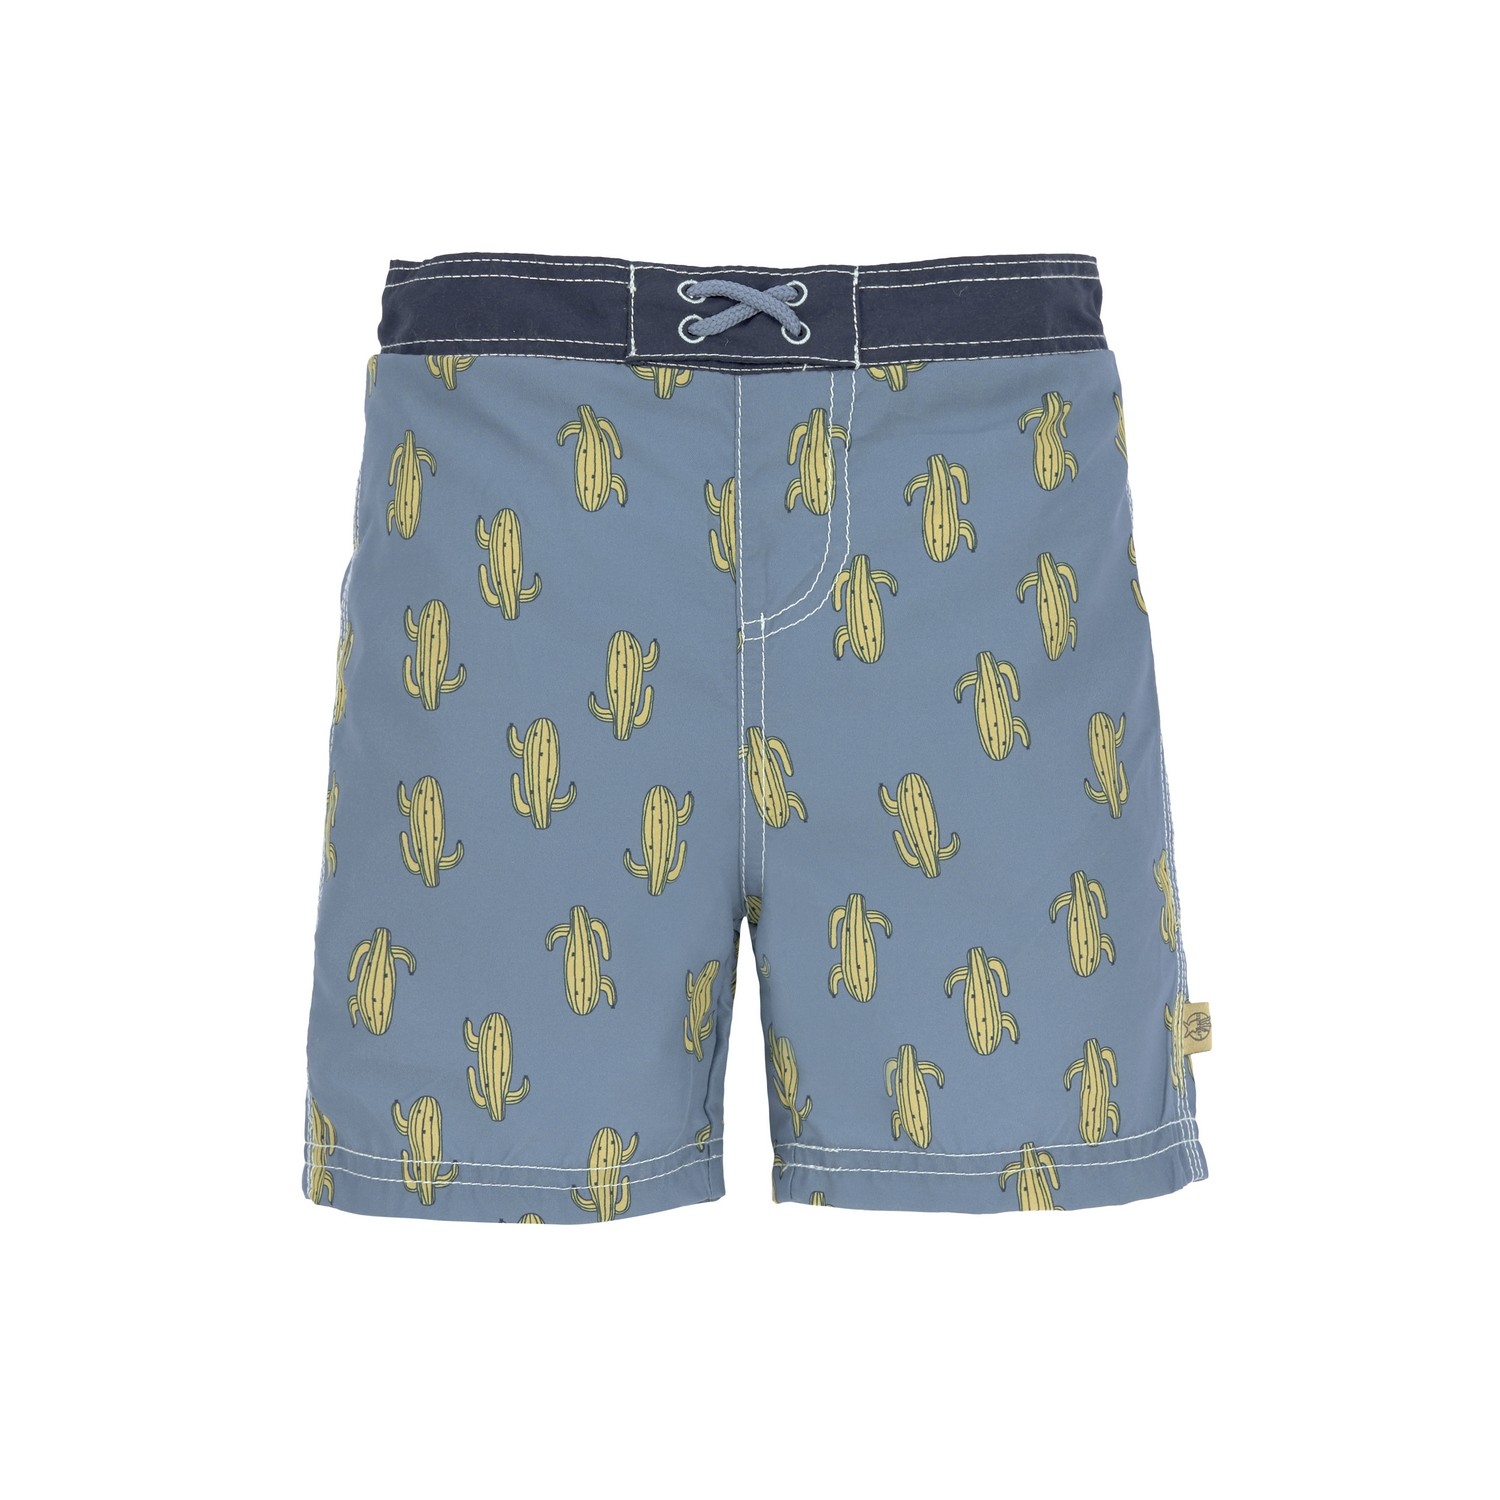 Lässig - Boys' UV swim shorts with nappy - Cactus - blue